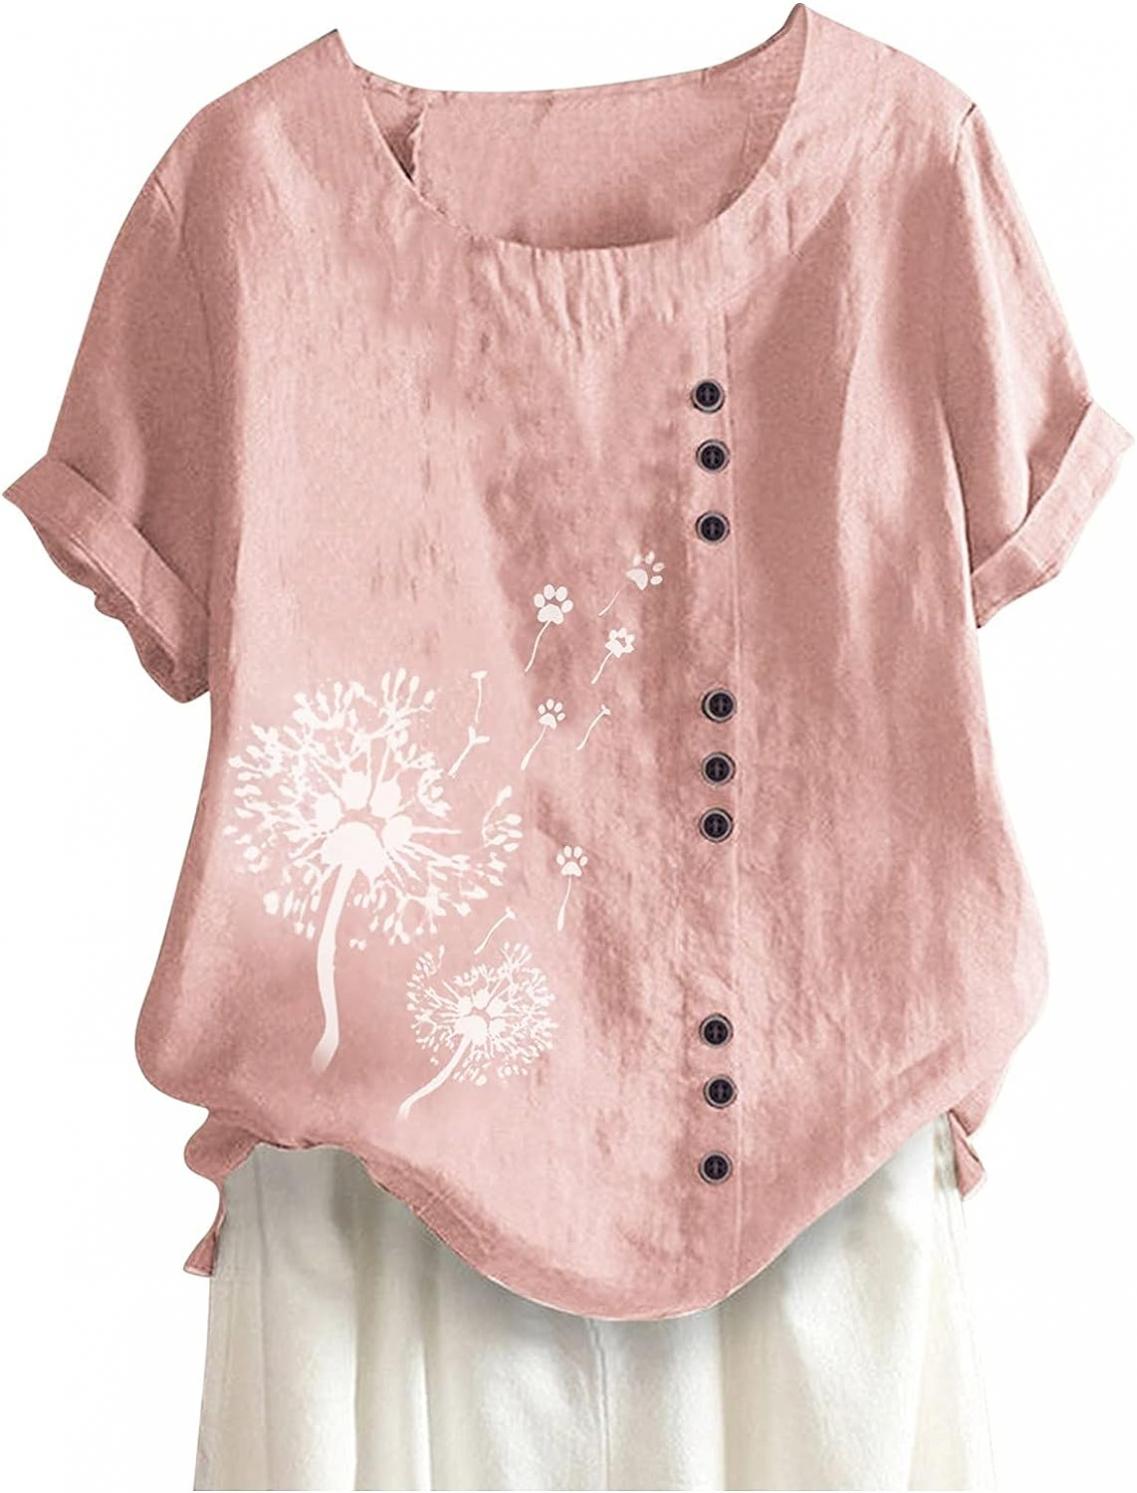 Cotton Linen Tops for Women 3/4 Sleeve Shirts Graphic Print Crewneck Vintage Blouse Tees Tshirts Tops Plus Size